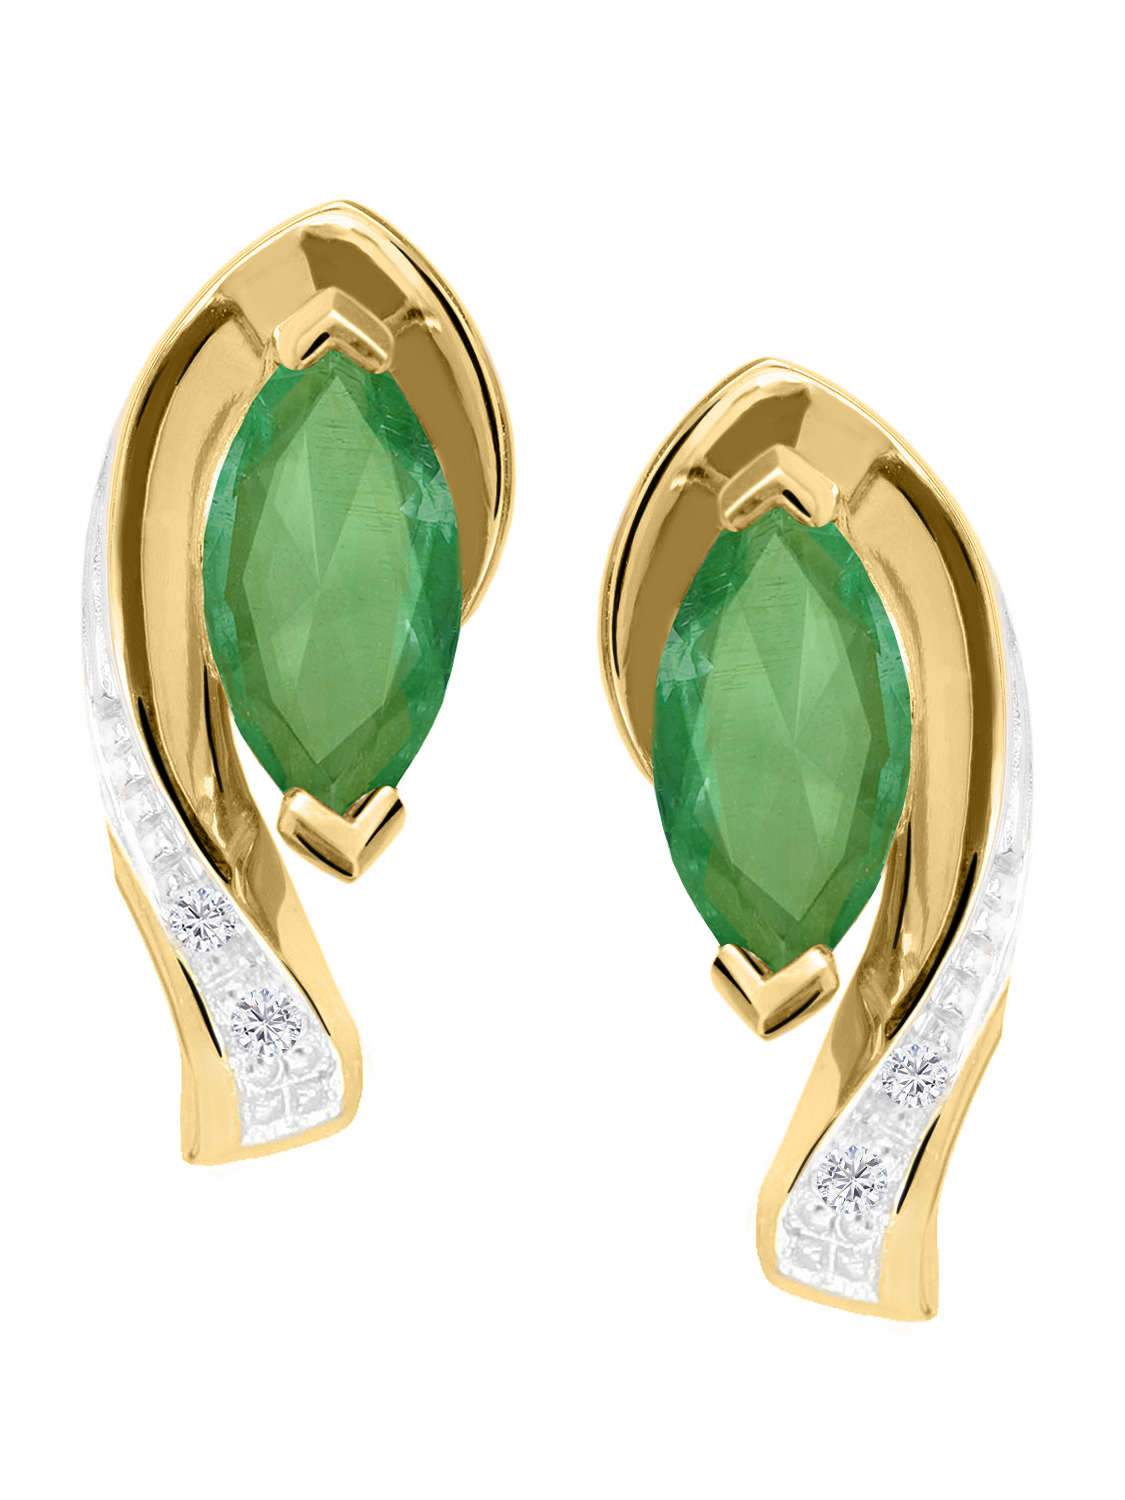 Eunundi - Smaragd Diamant Edelsteinohrringe 375 Gold - 0,01ct.